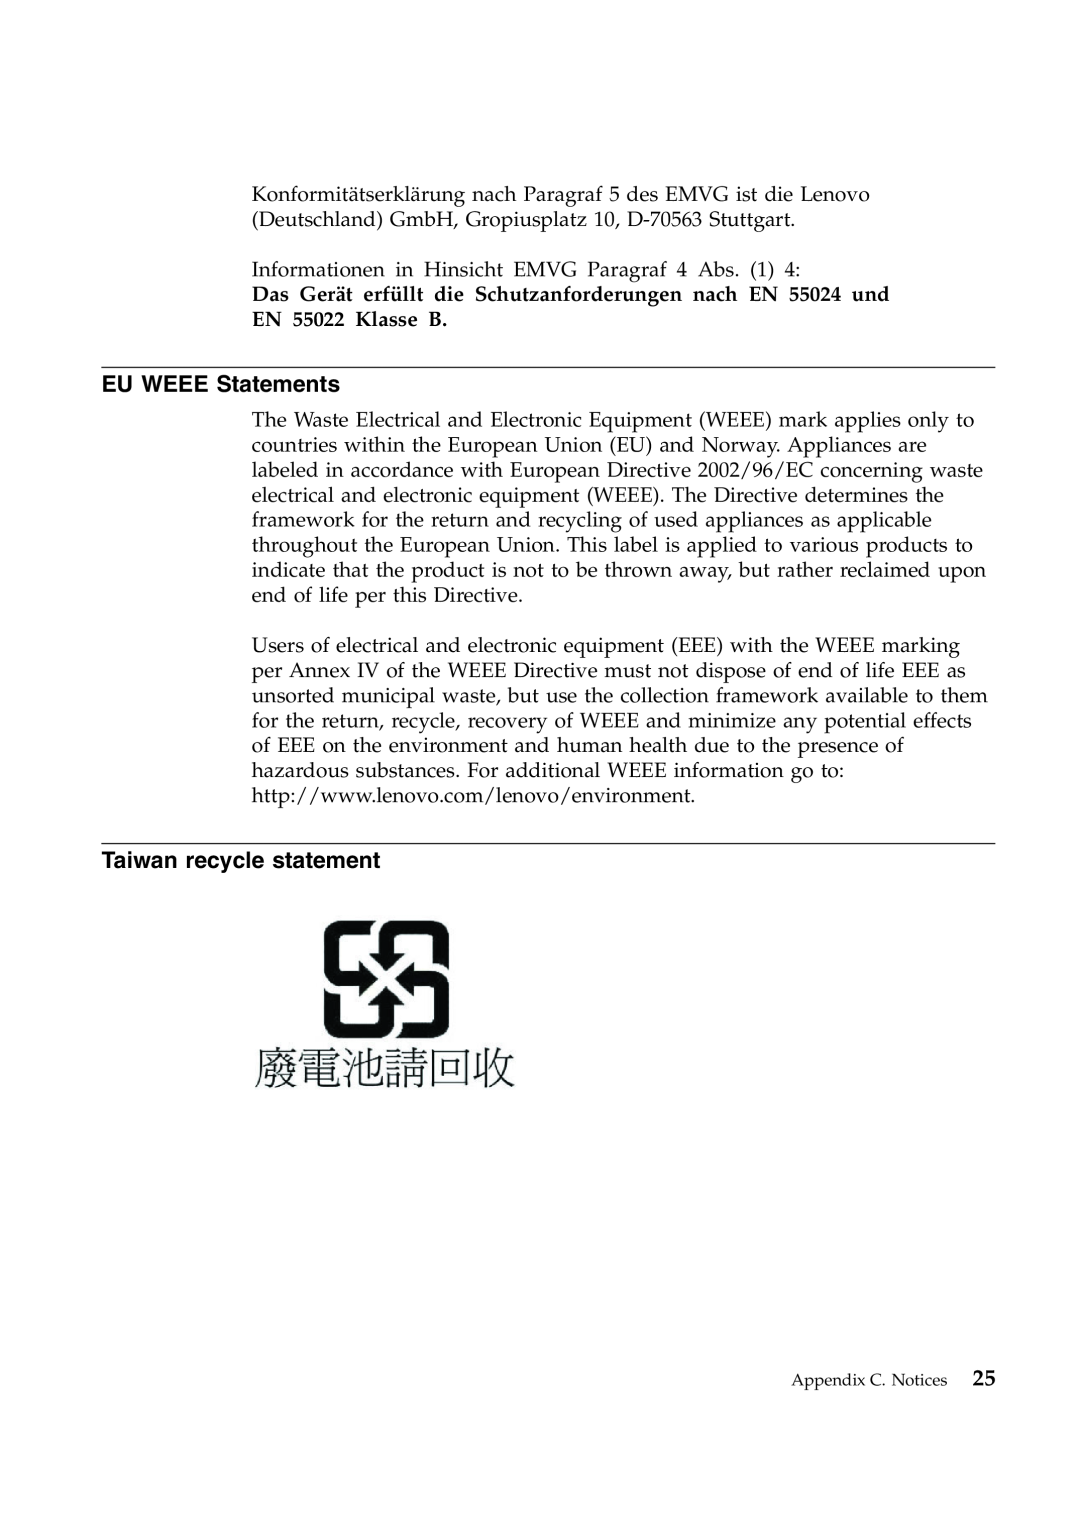 Lenovo T410S manual EU WEEE Statements, Taiwan recycle statement, EN 55022 Klasse B 